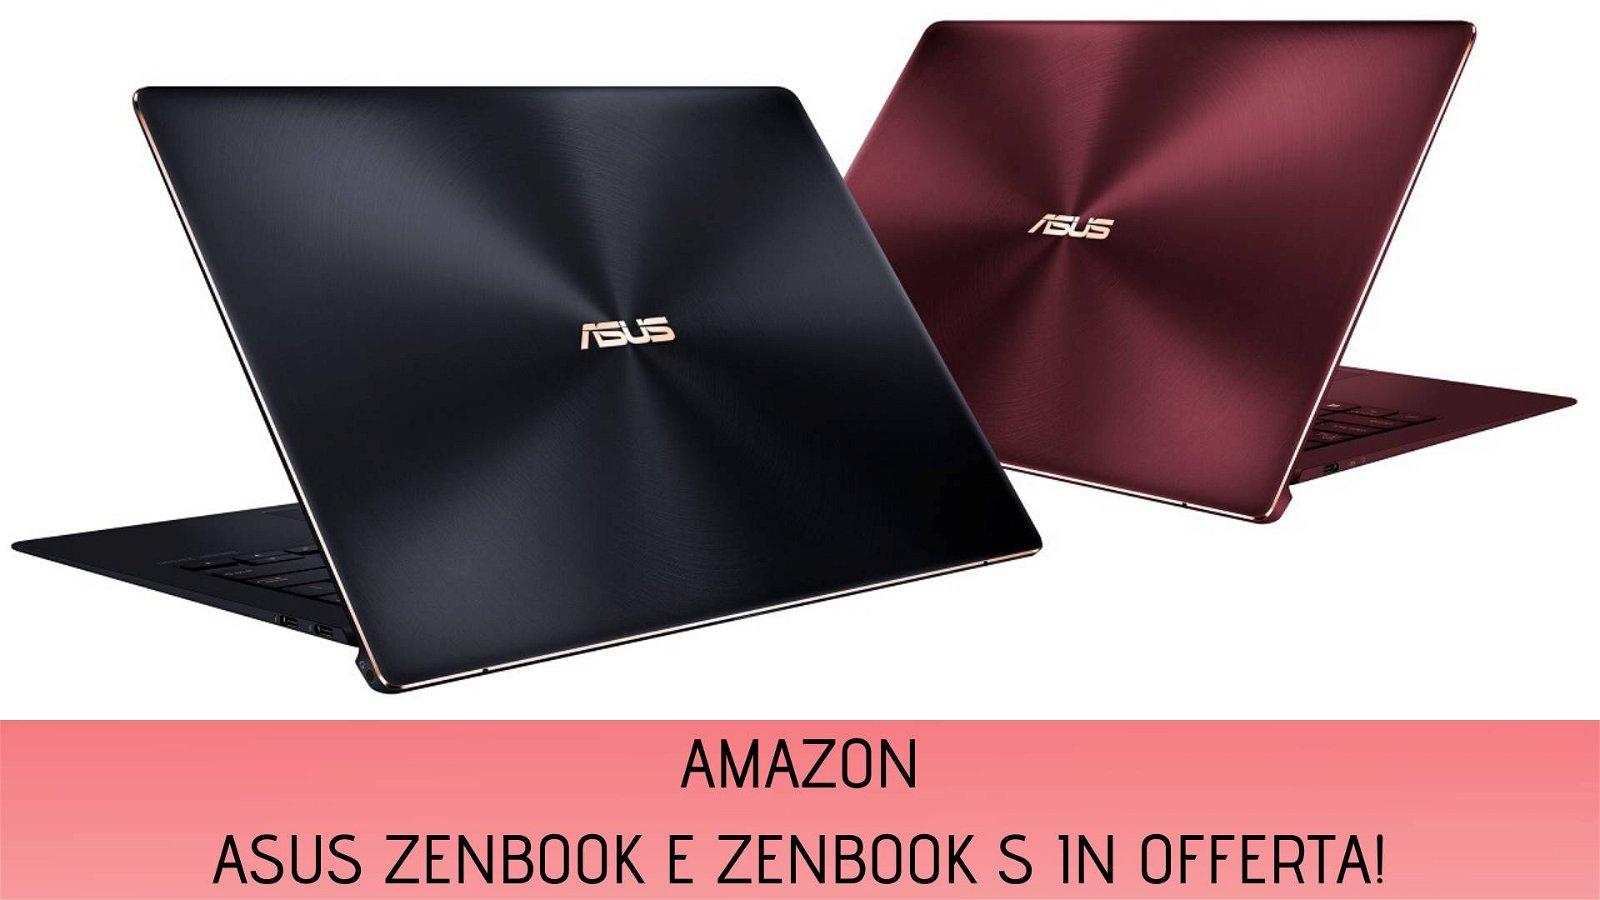 Immagine di Asus Zenbook e Zenbook S, due top offerta da non lasciarsi sfuggire